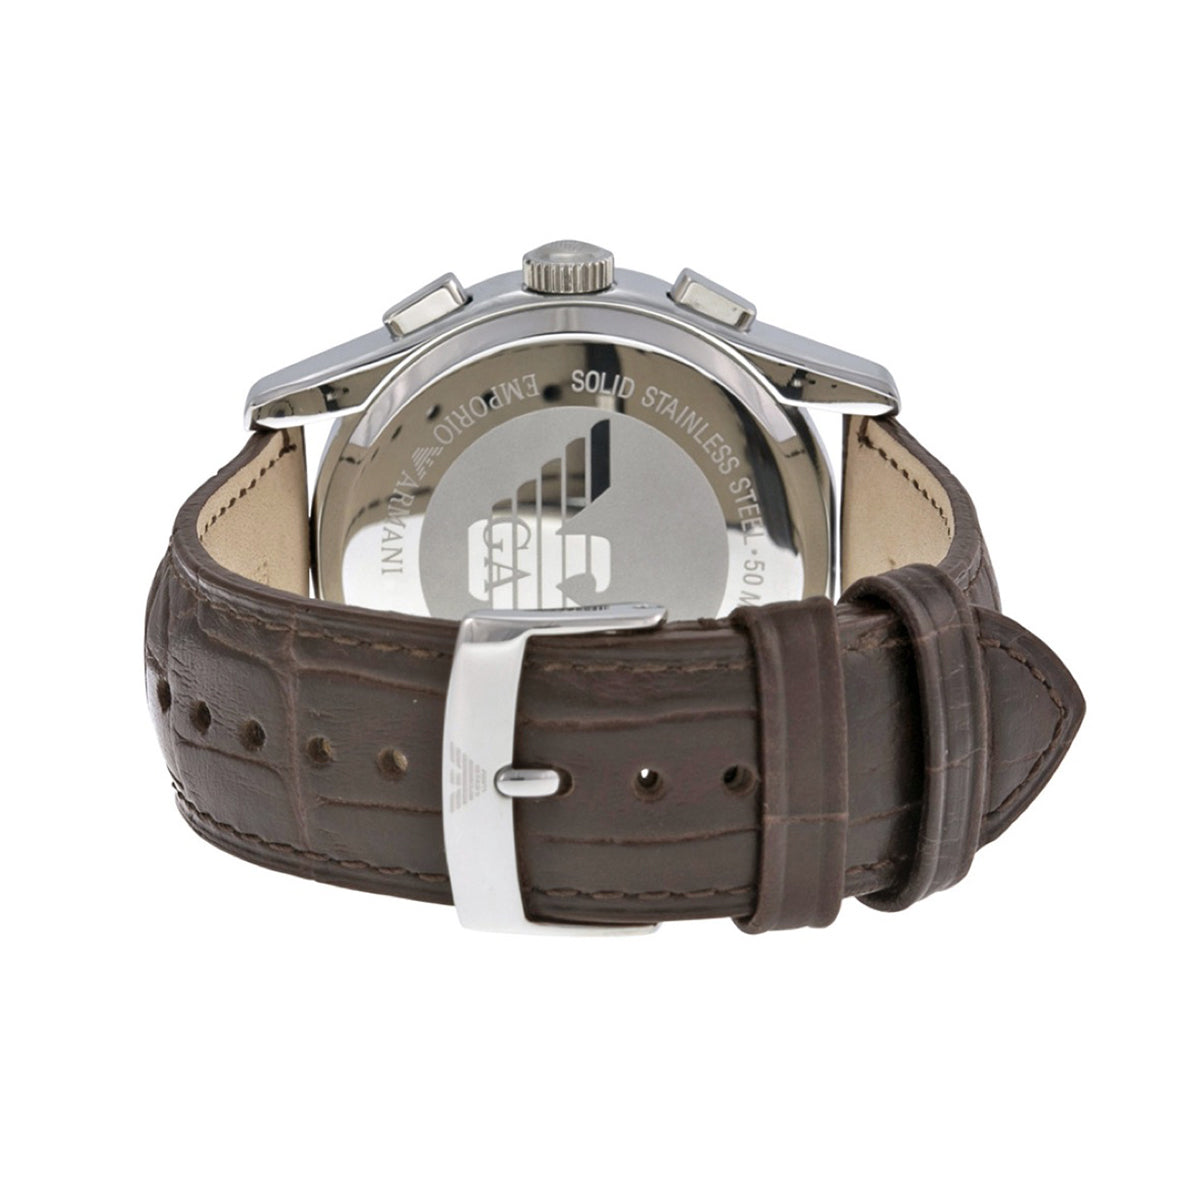 armani brown leather watch